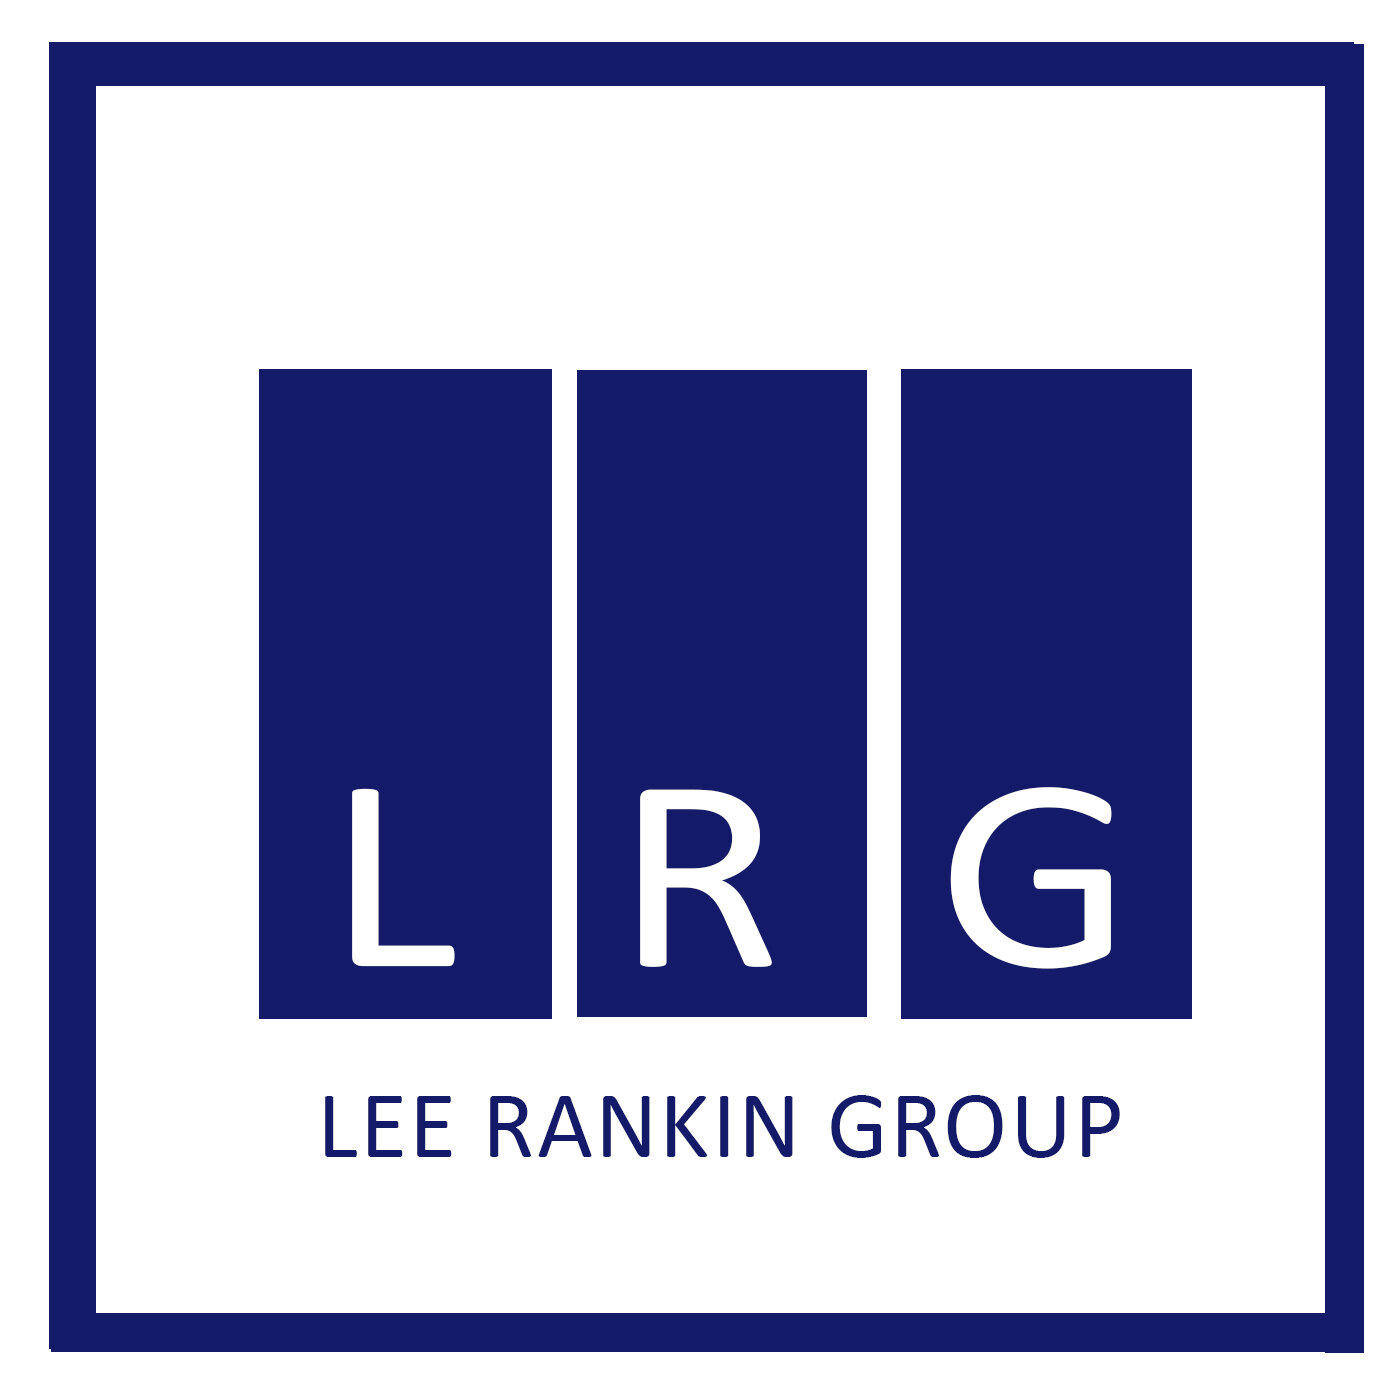 Lee Rankin Group